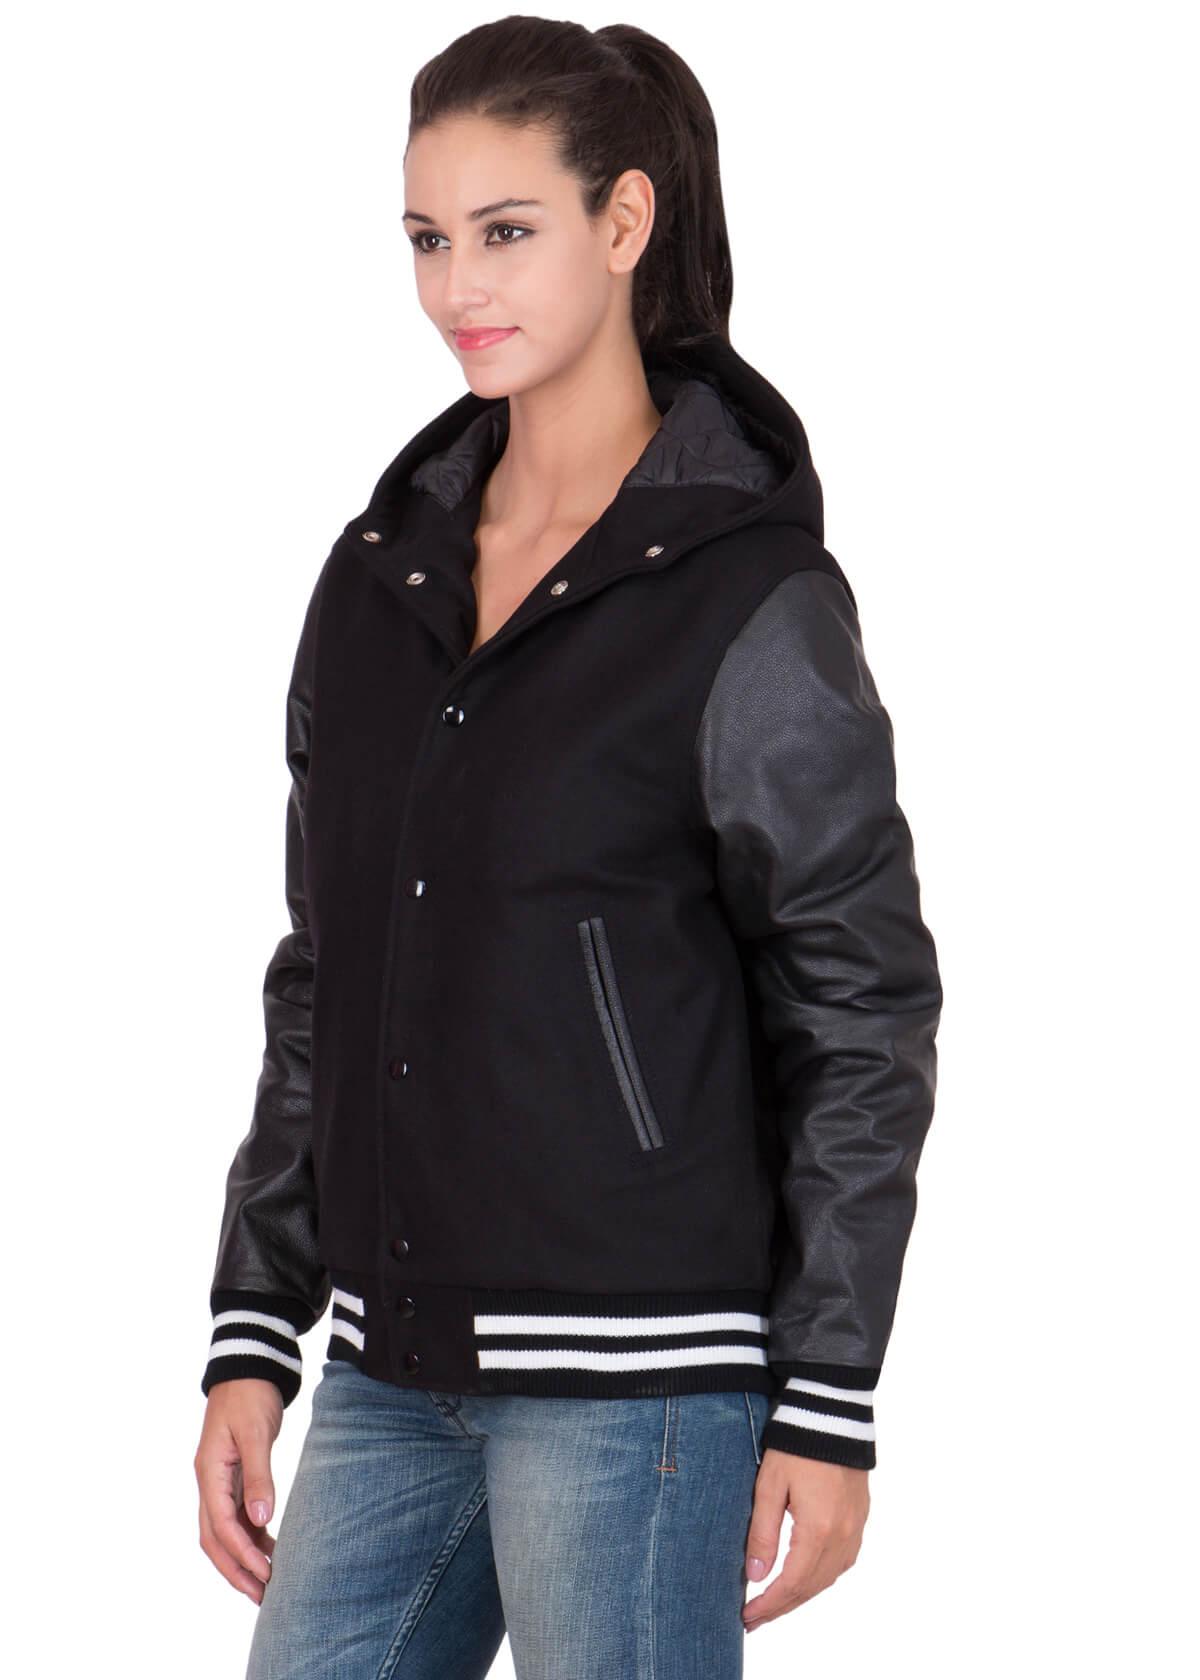 Womens Black Hood Varsity Jacket With Leather Sleeves-2